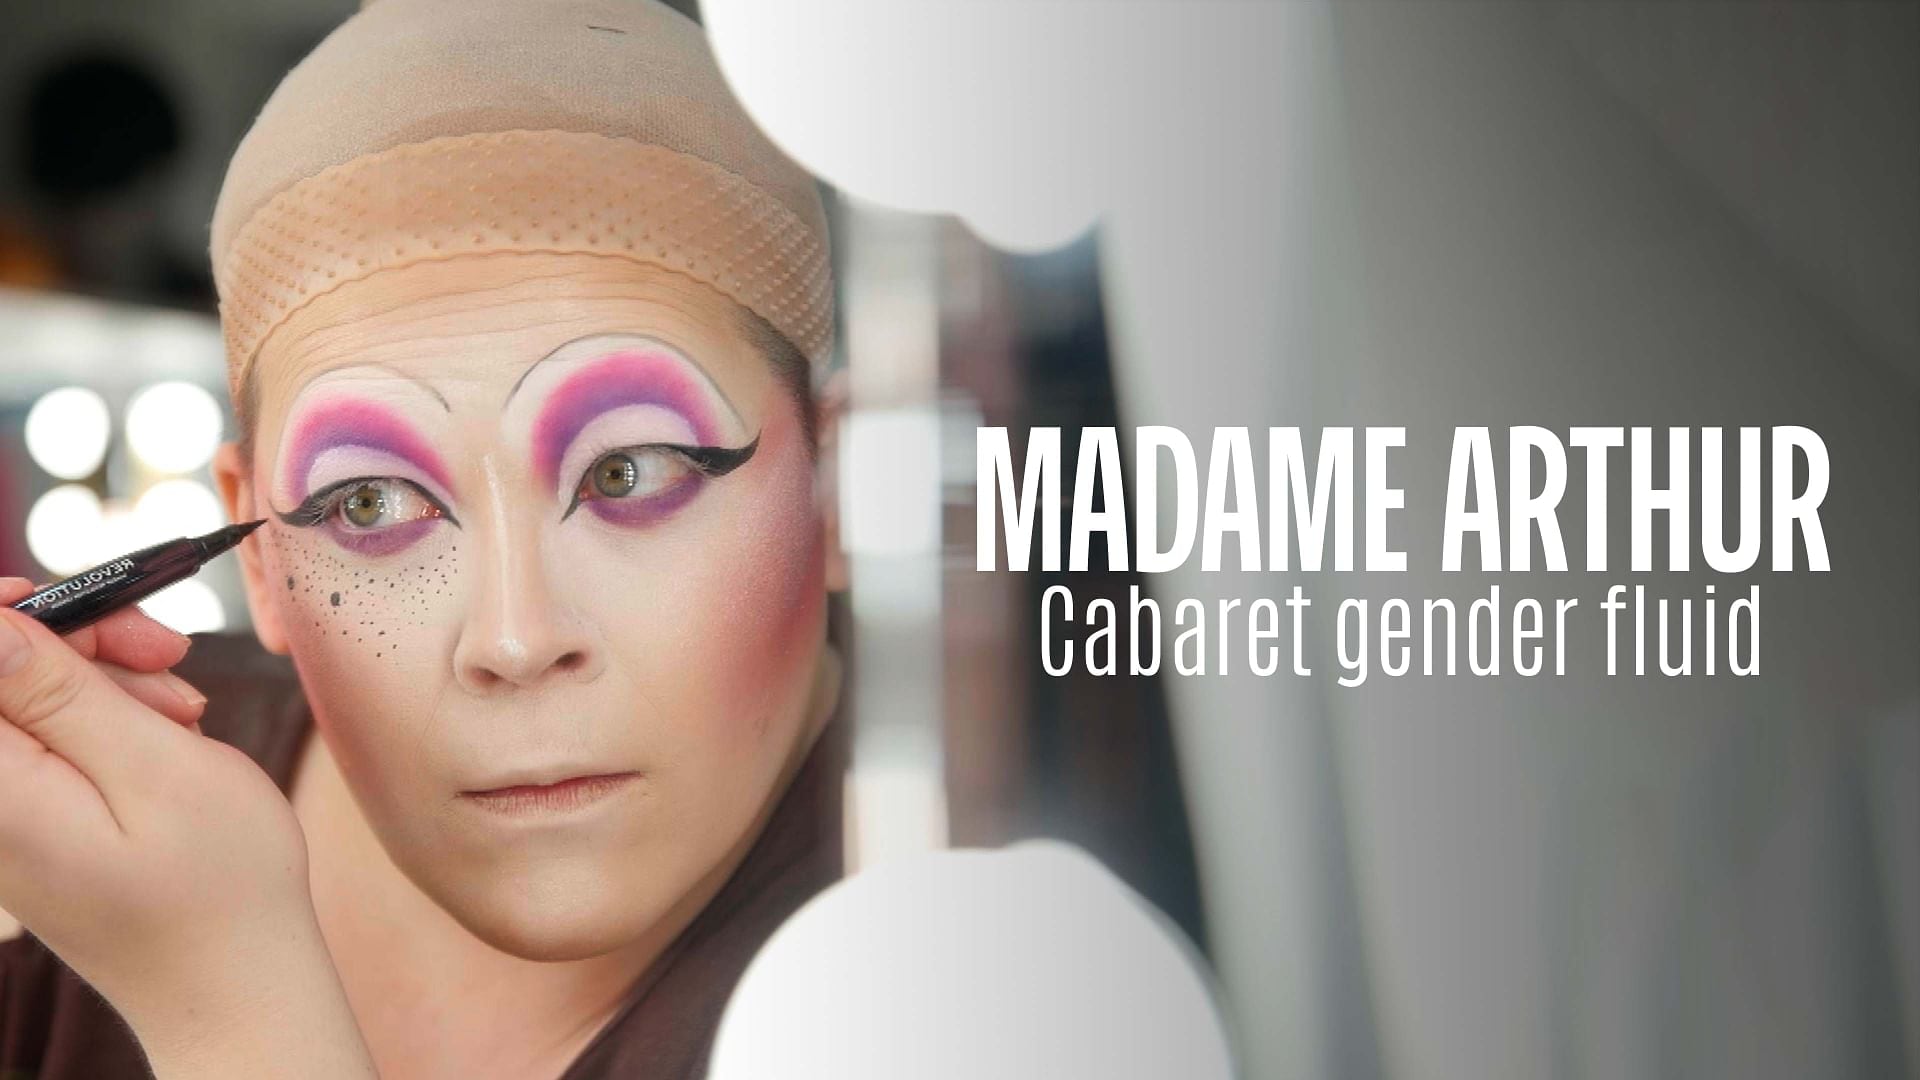 Re: sguardi sulla società - Madame Arthur: un cabaret "gender fluid"